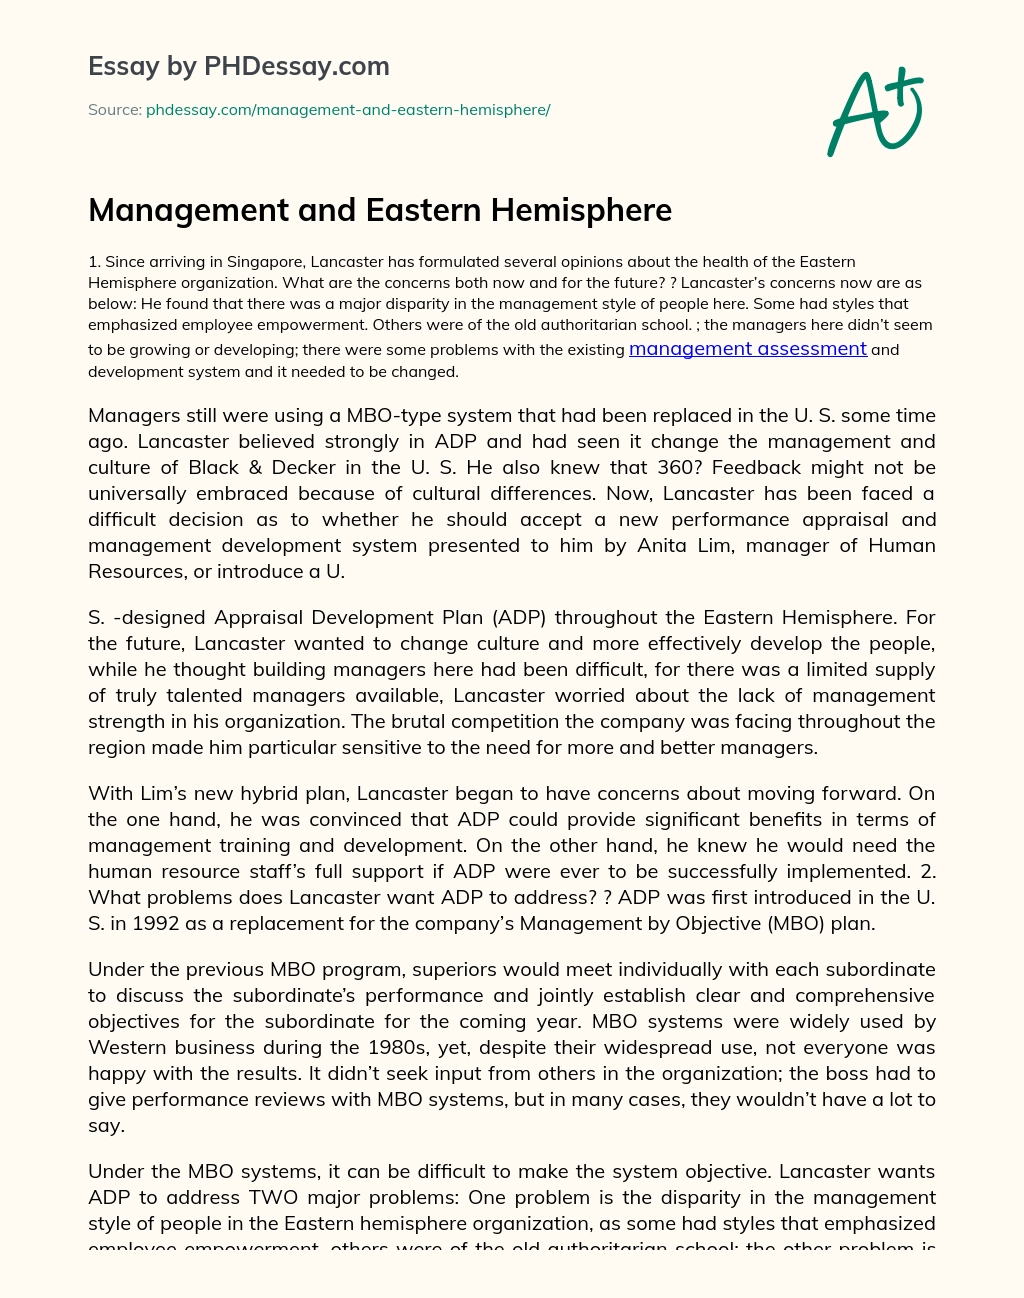 Management and Eastern Hemisphere essay